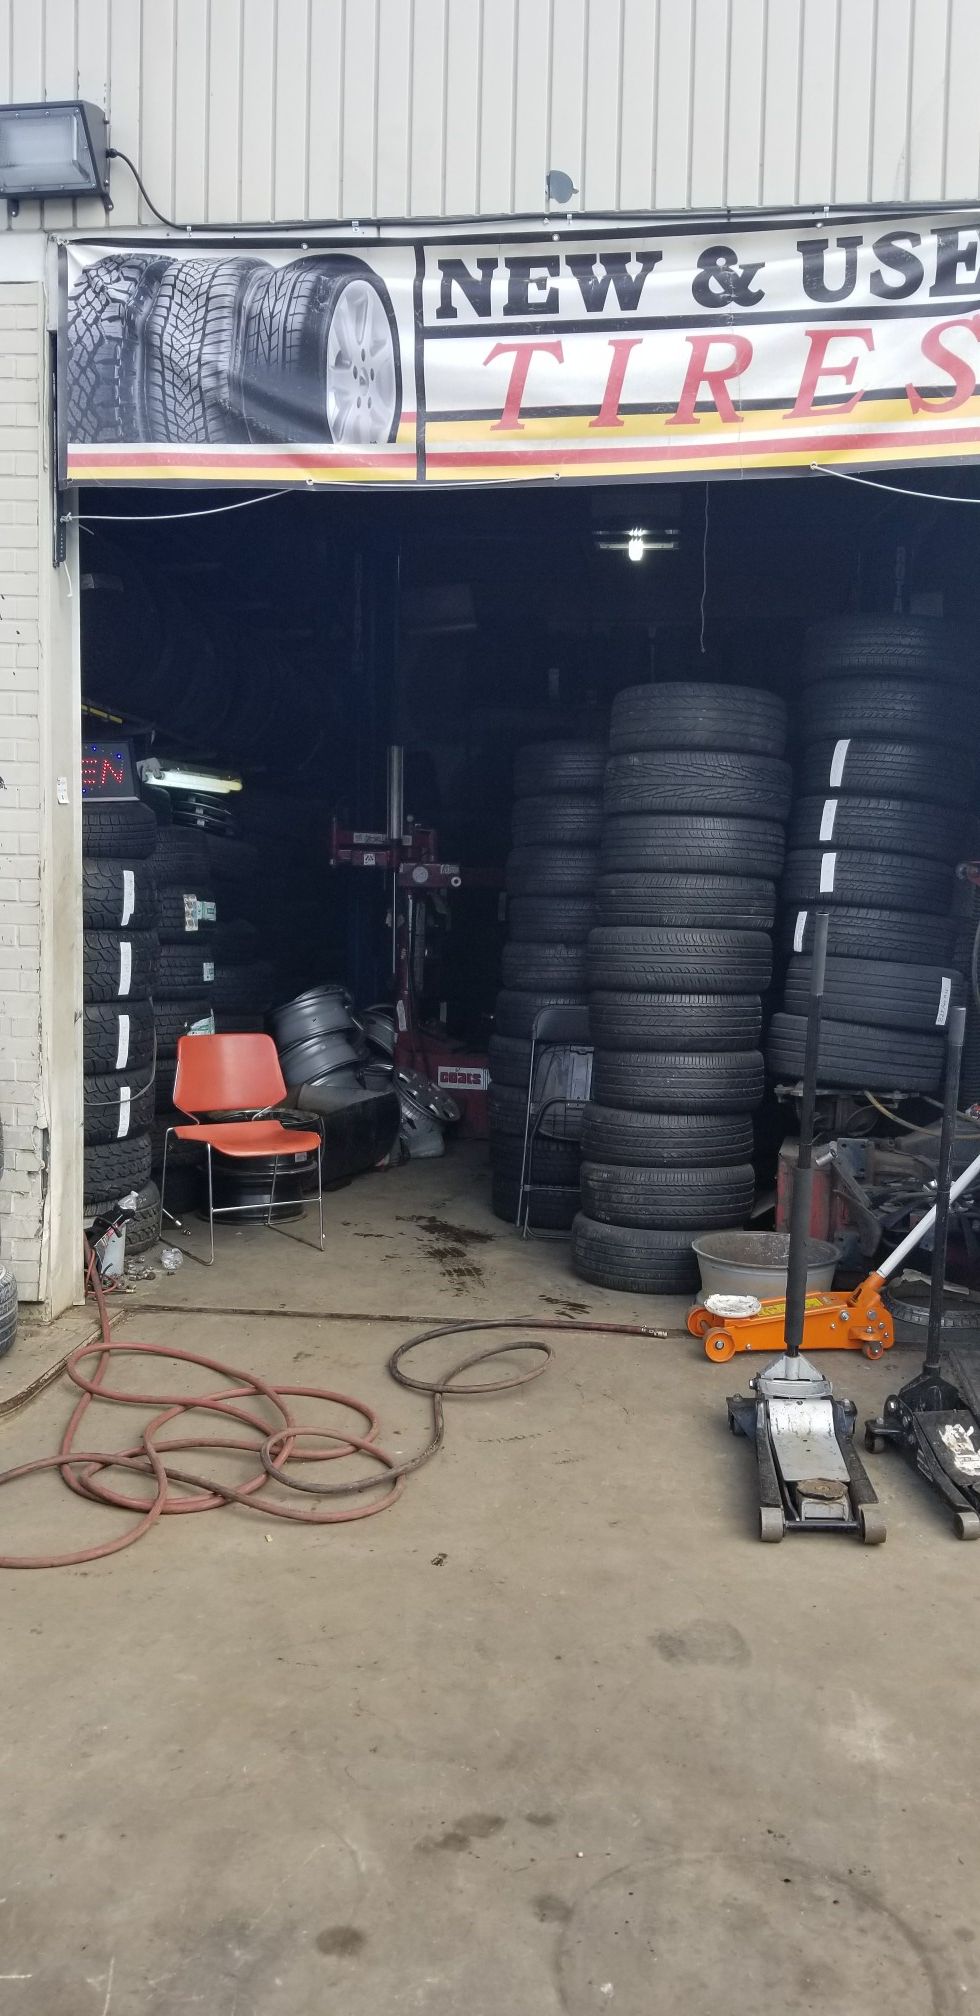 New and used tires . 3825 Alabama Avenue south east Washington dc